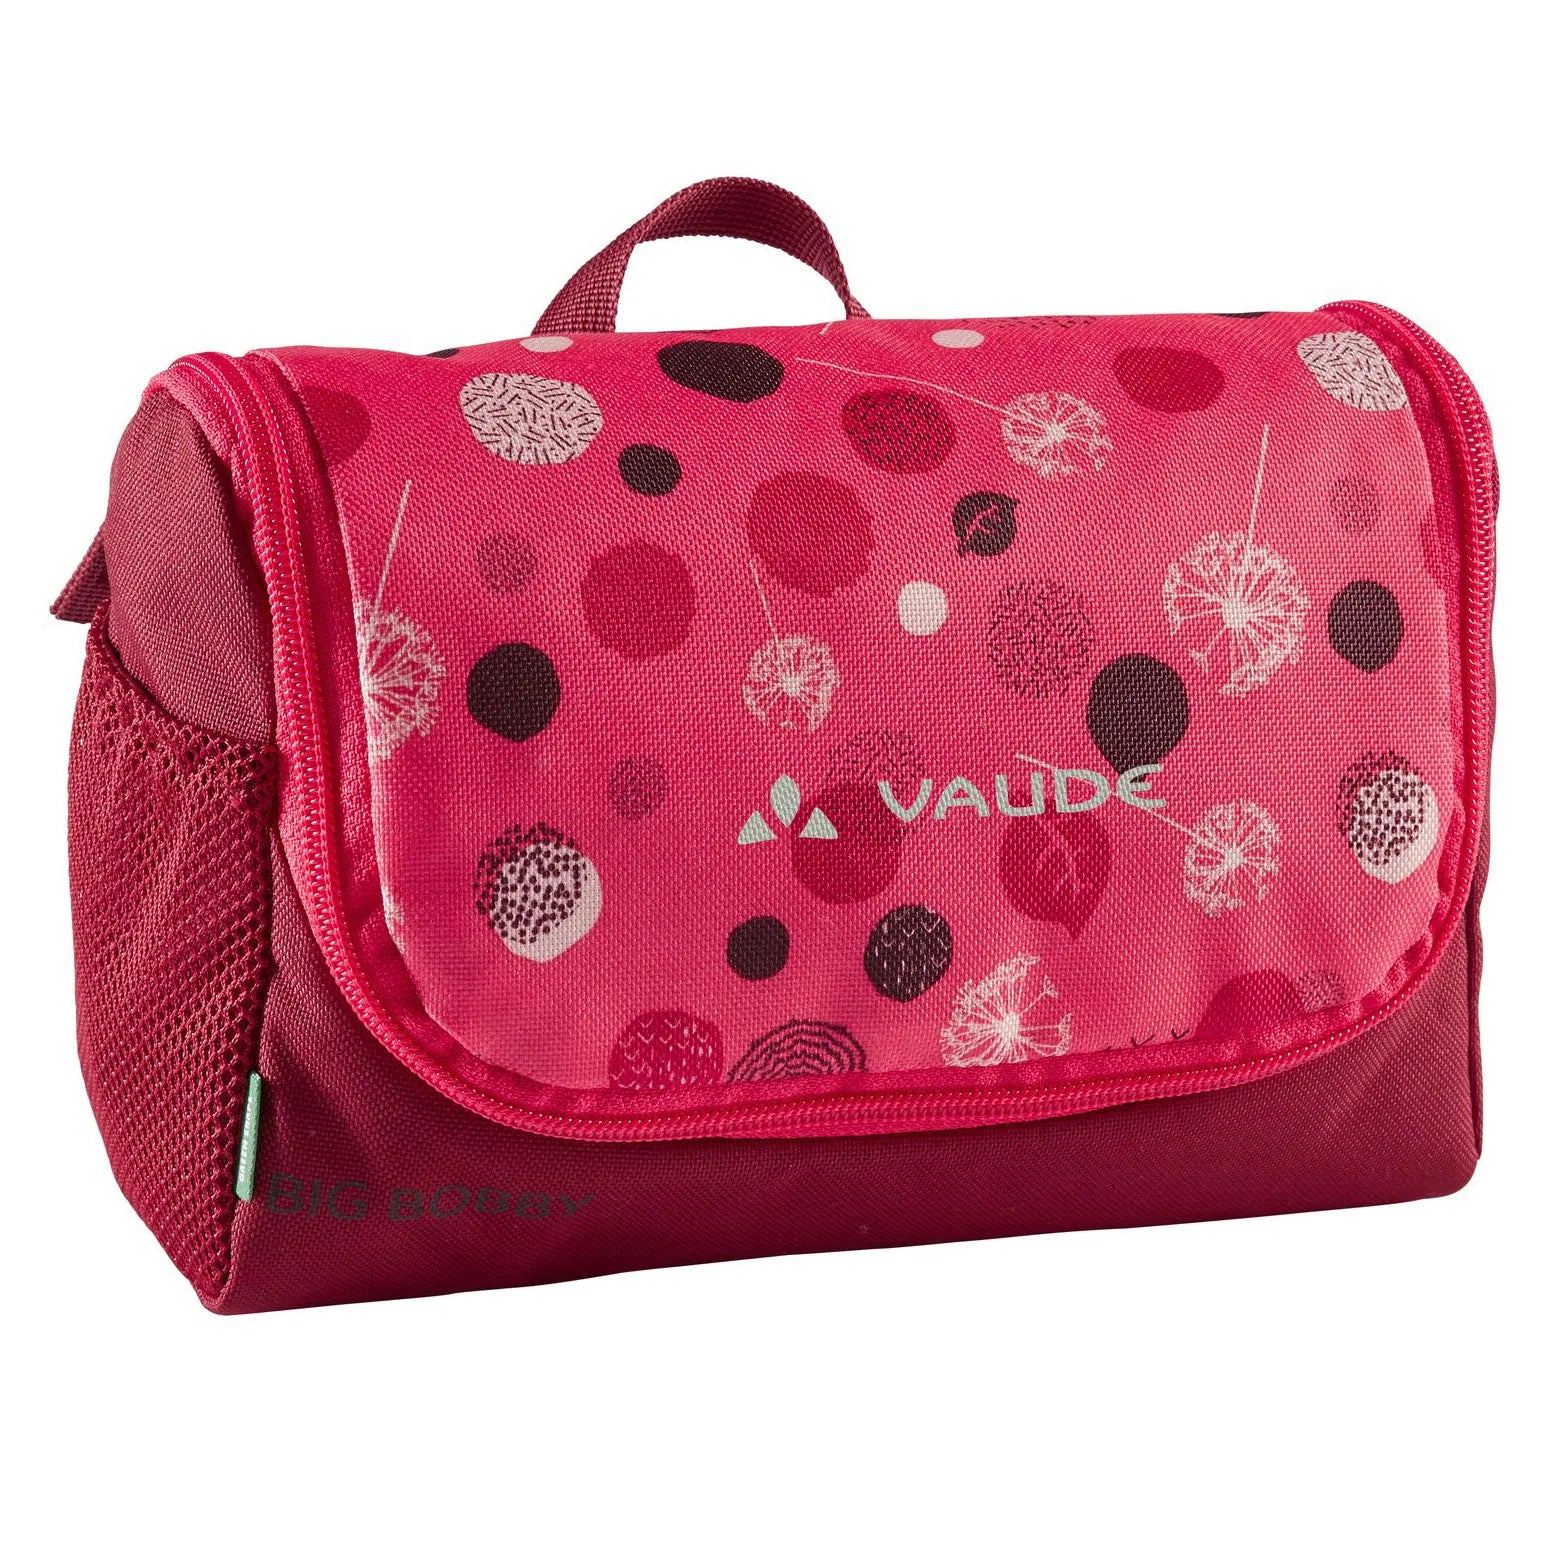 Vaude Family Big Bobby kids toiletry bag 21 cm - bright pink-cranberry